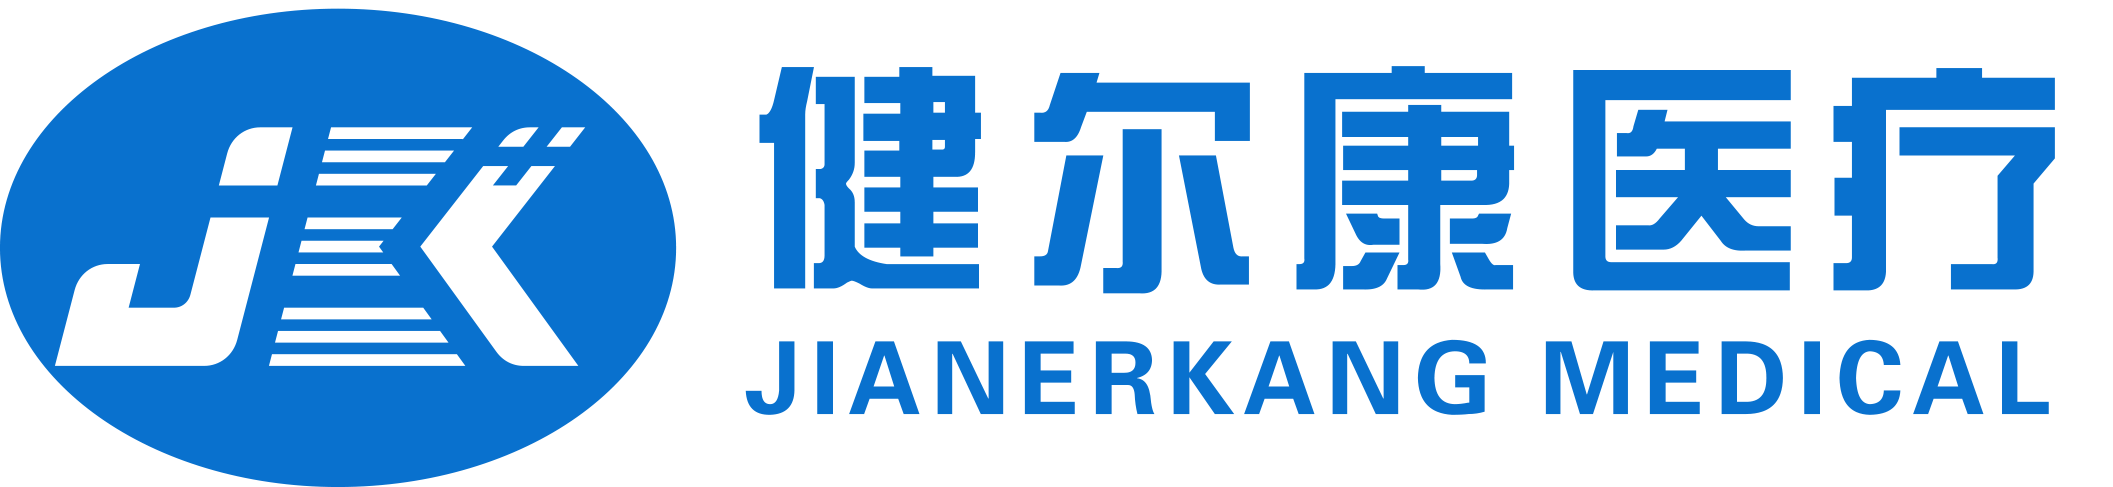 Jianerkang Medical Co., Ltd